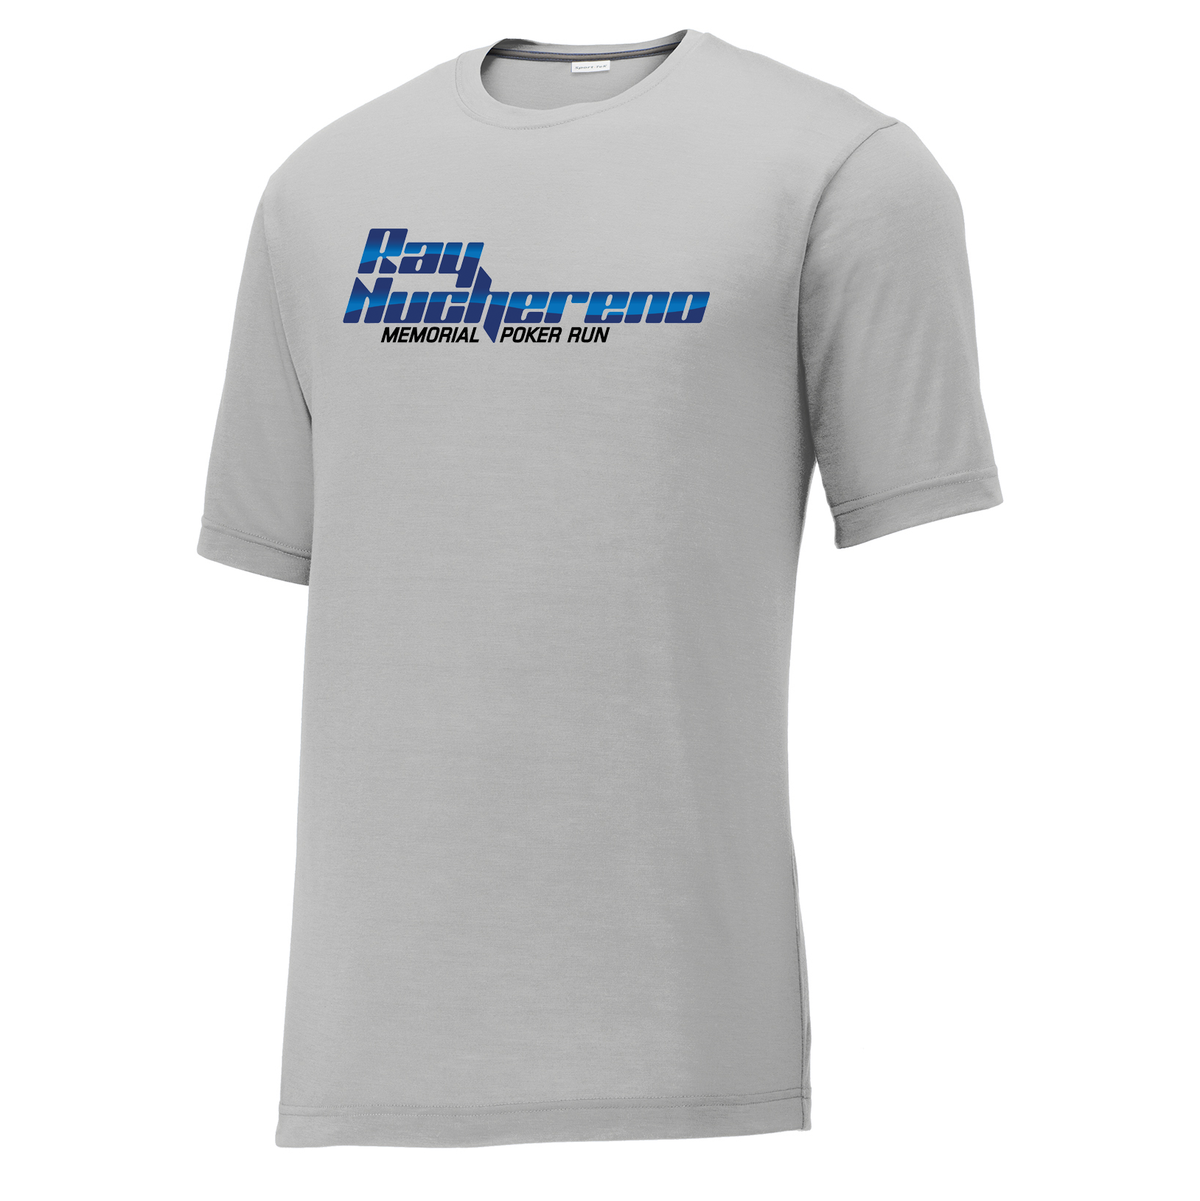 Ray Nuchereno Poker Runs CottonTouch Performance T-Shirt